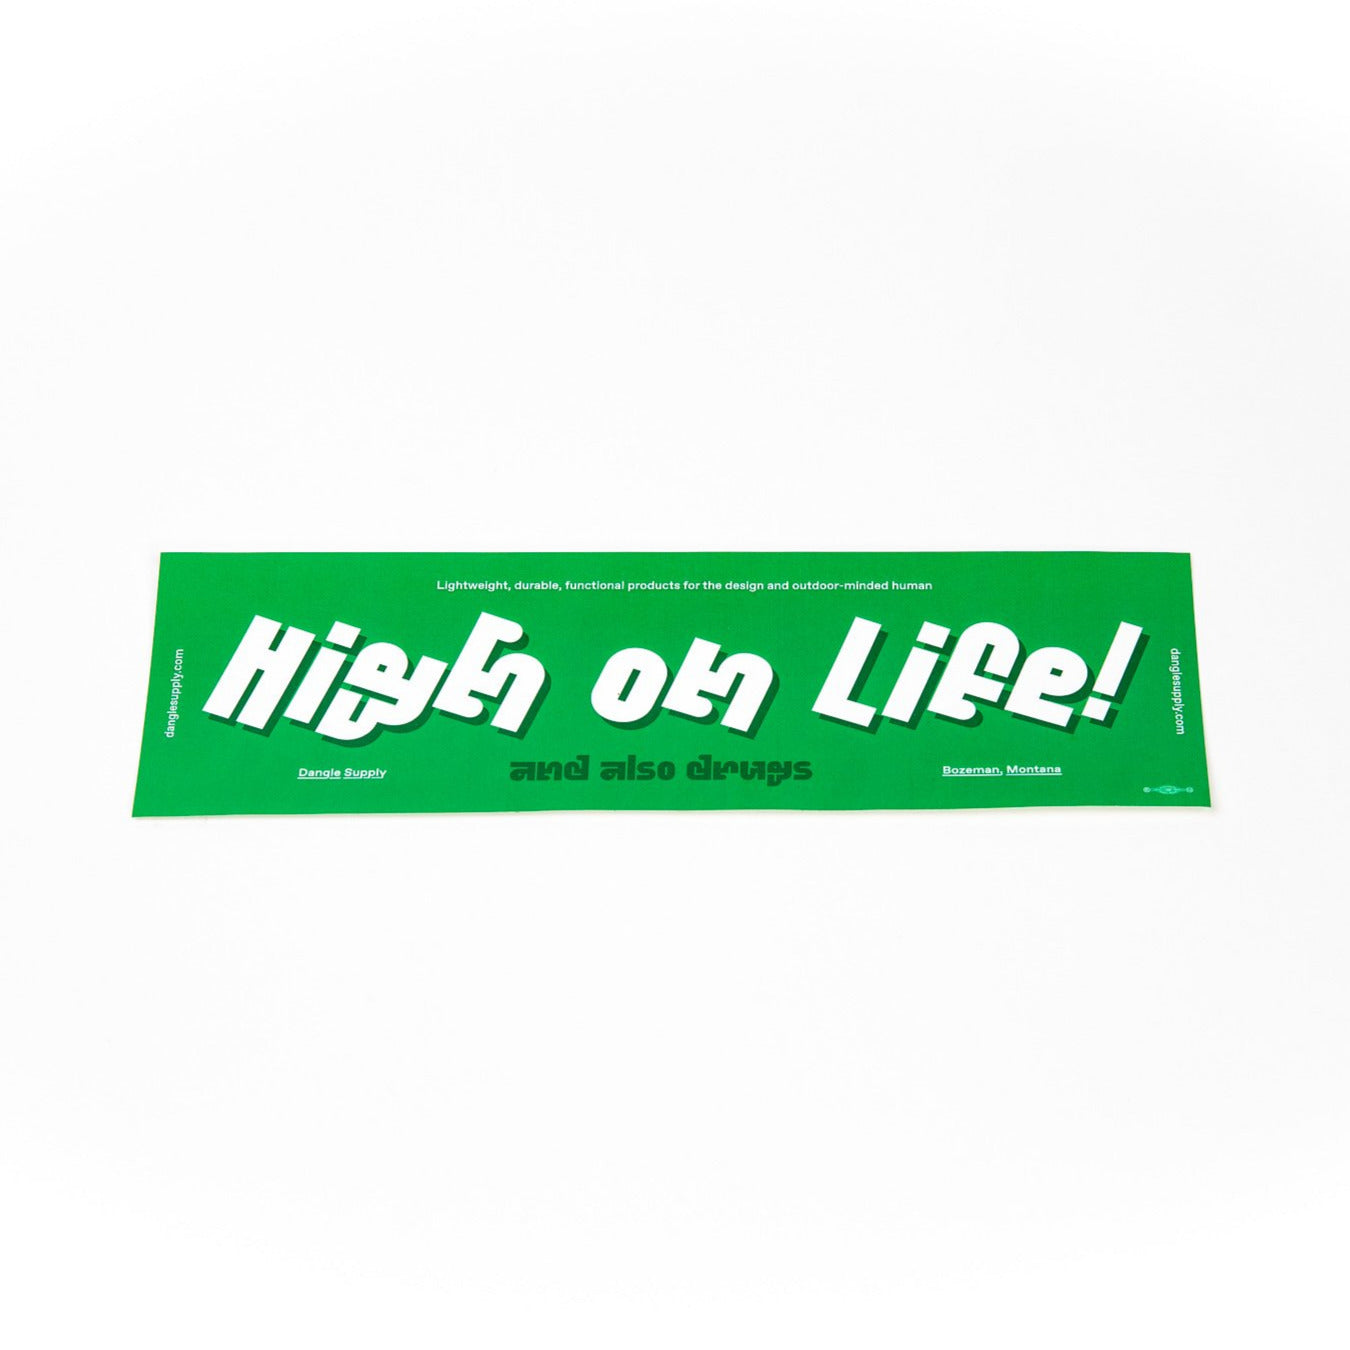 High on Life! Bumper Sticker